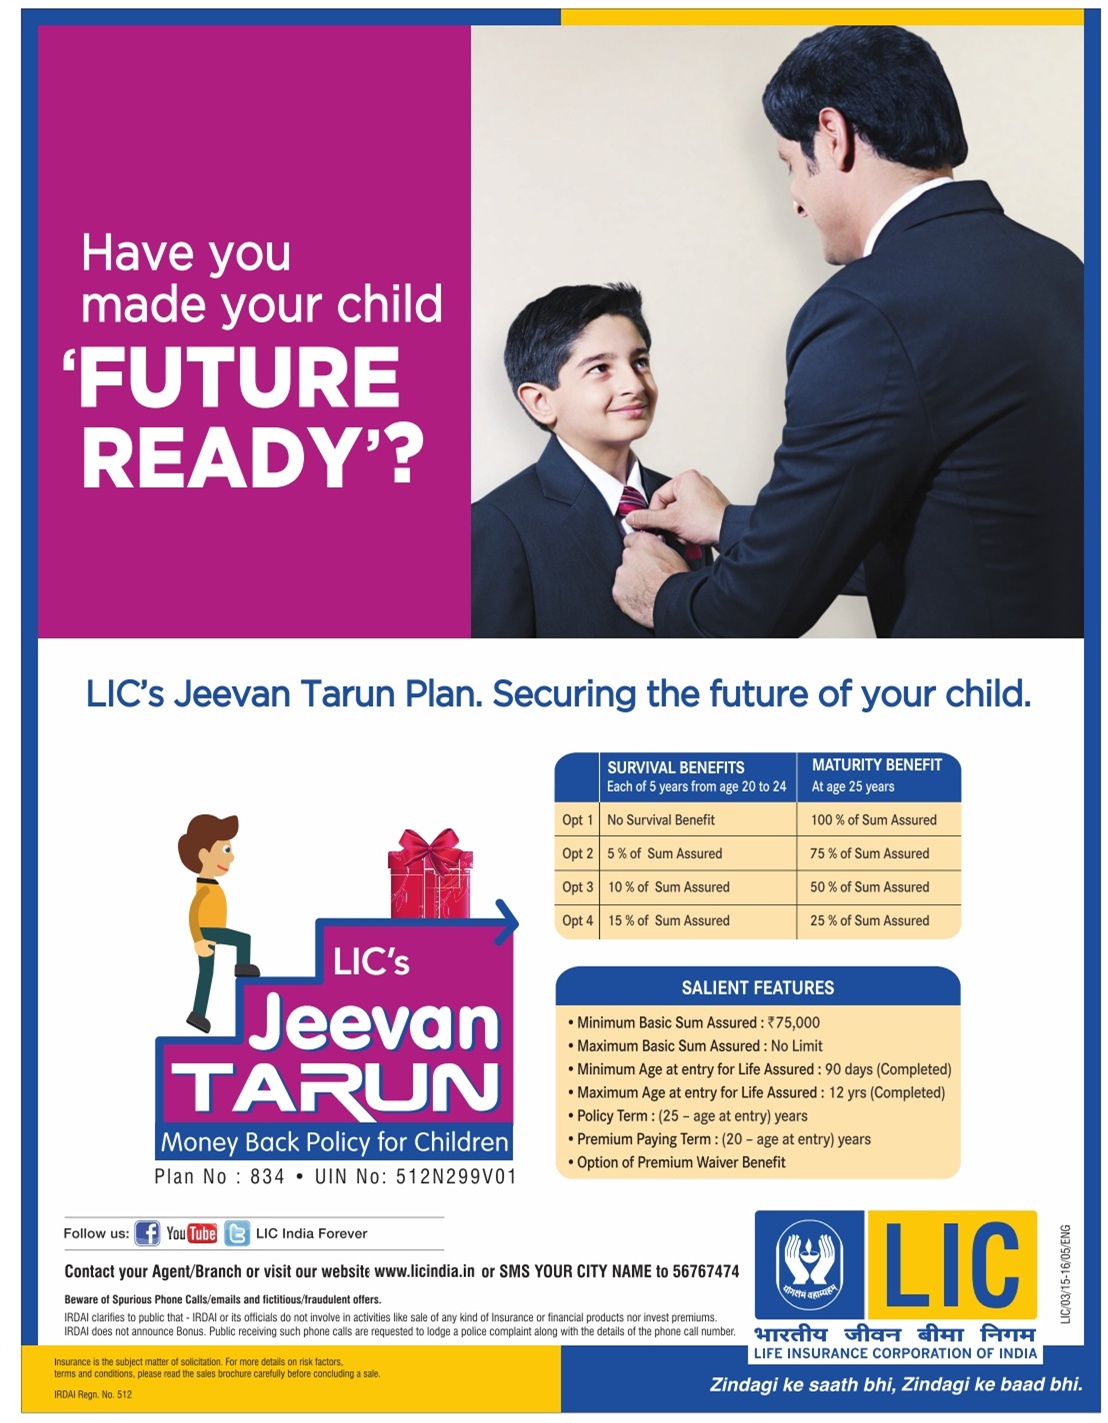 LIC's New Jeevan Tarun